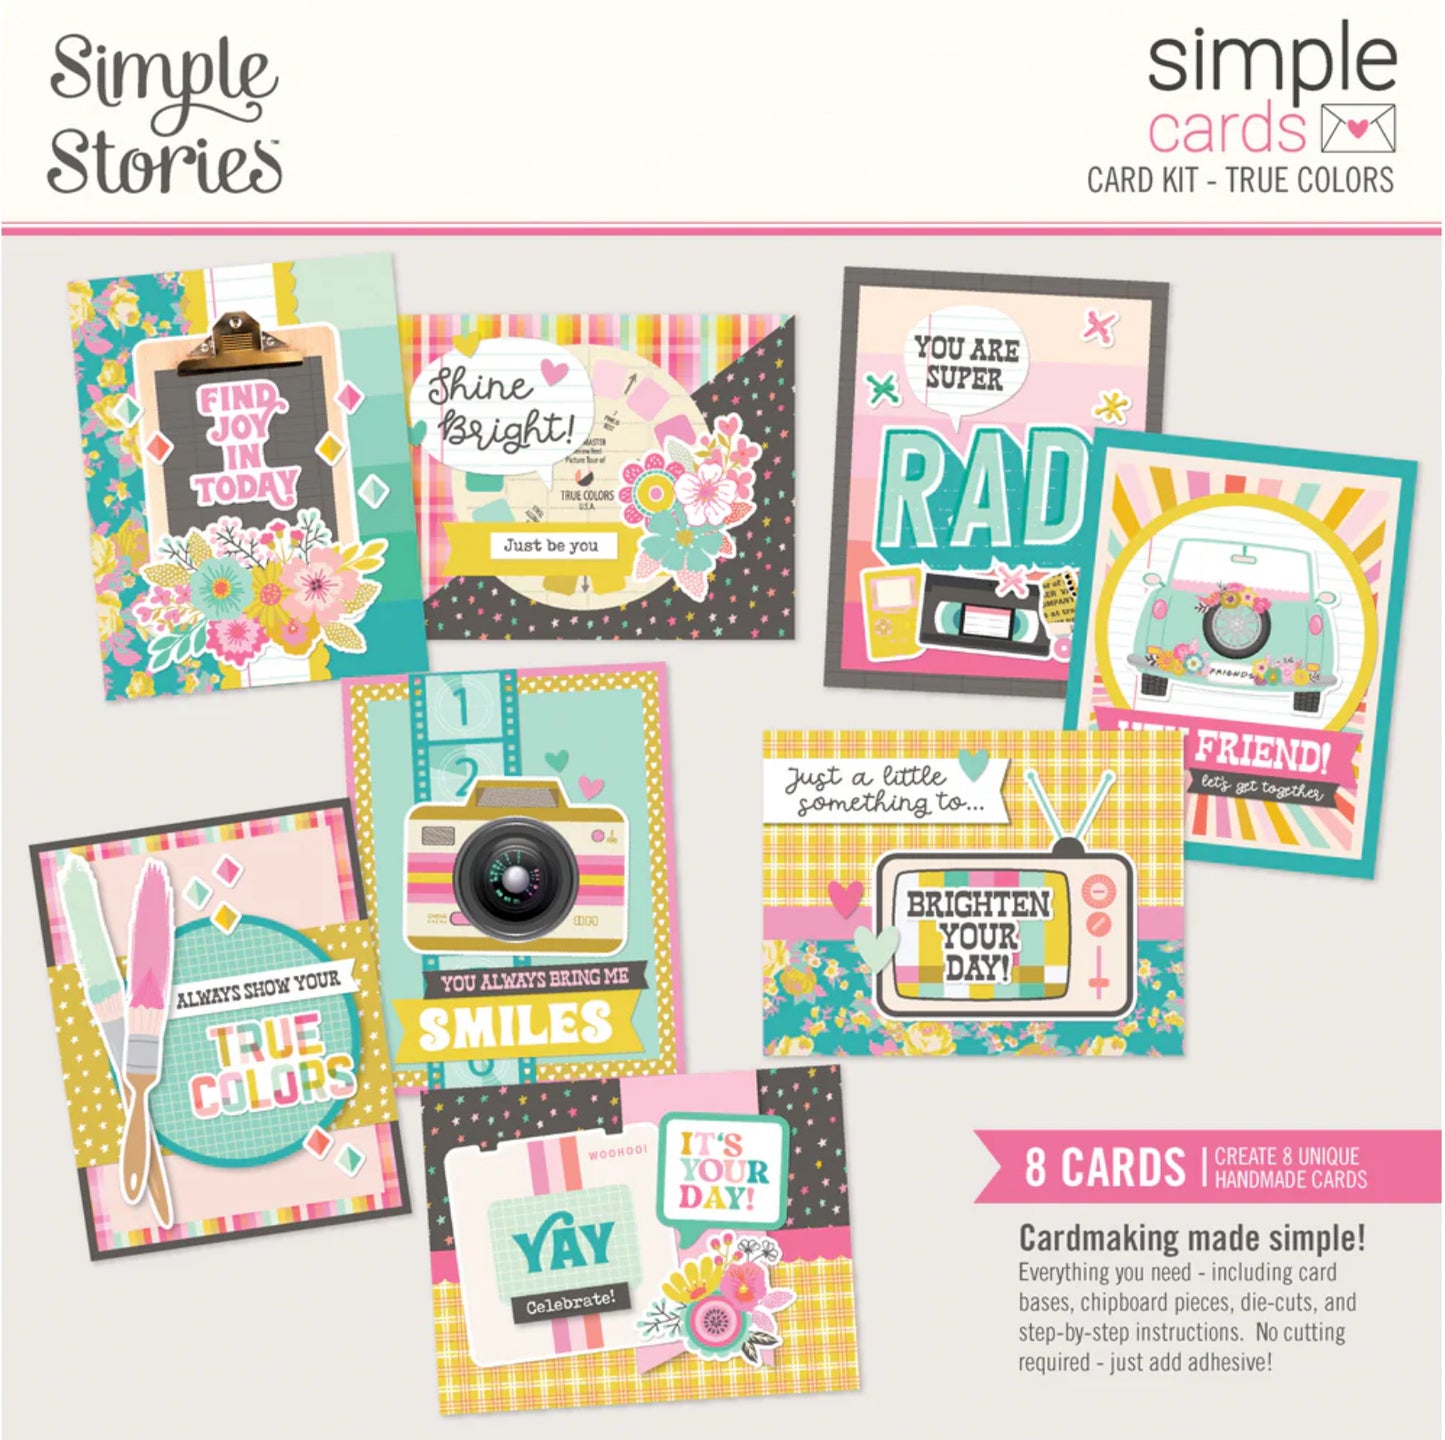 Simple Stories - Simple Cards Card Kit - True Colors